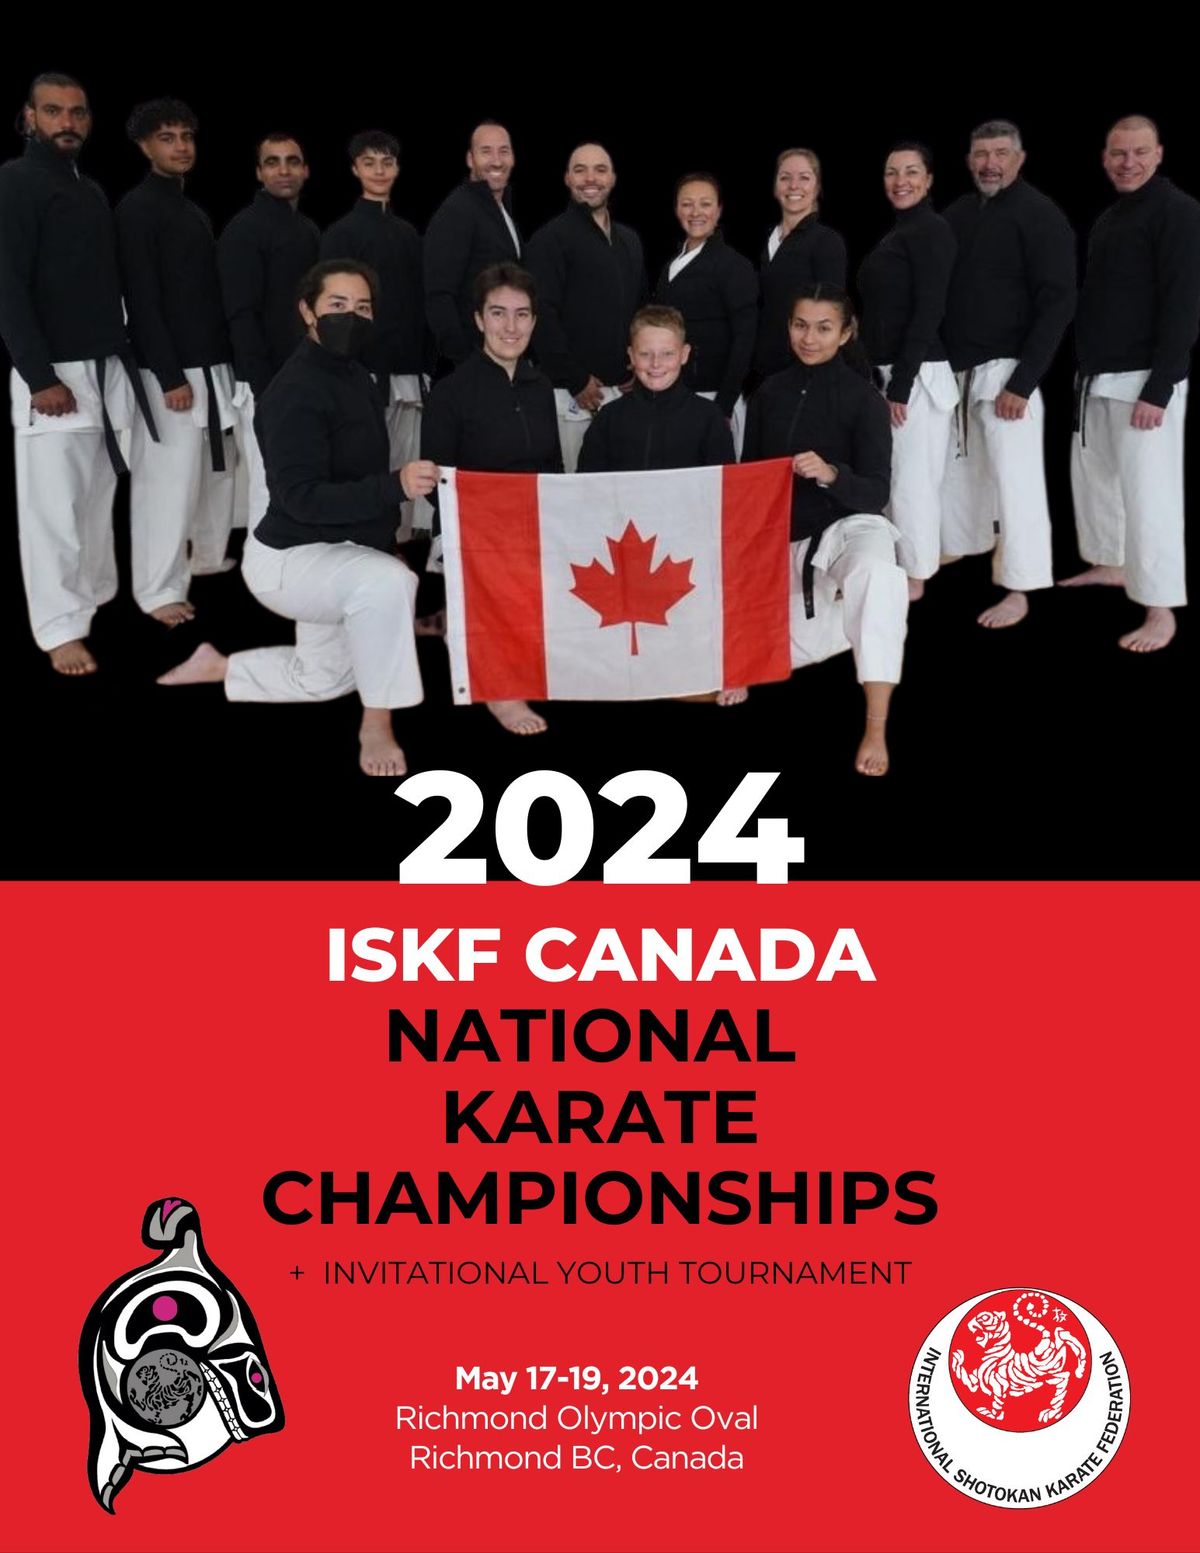 2024 ISKF Canada National Seminar & Championships and Invitational Youth Tournament